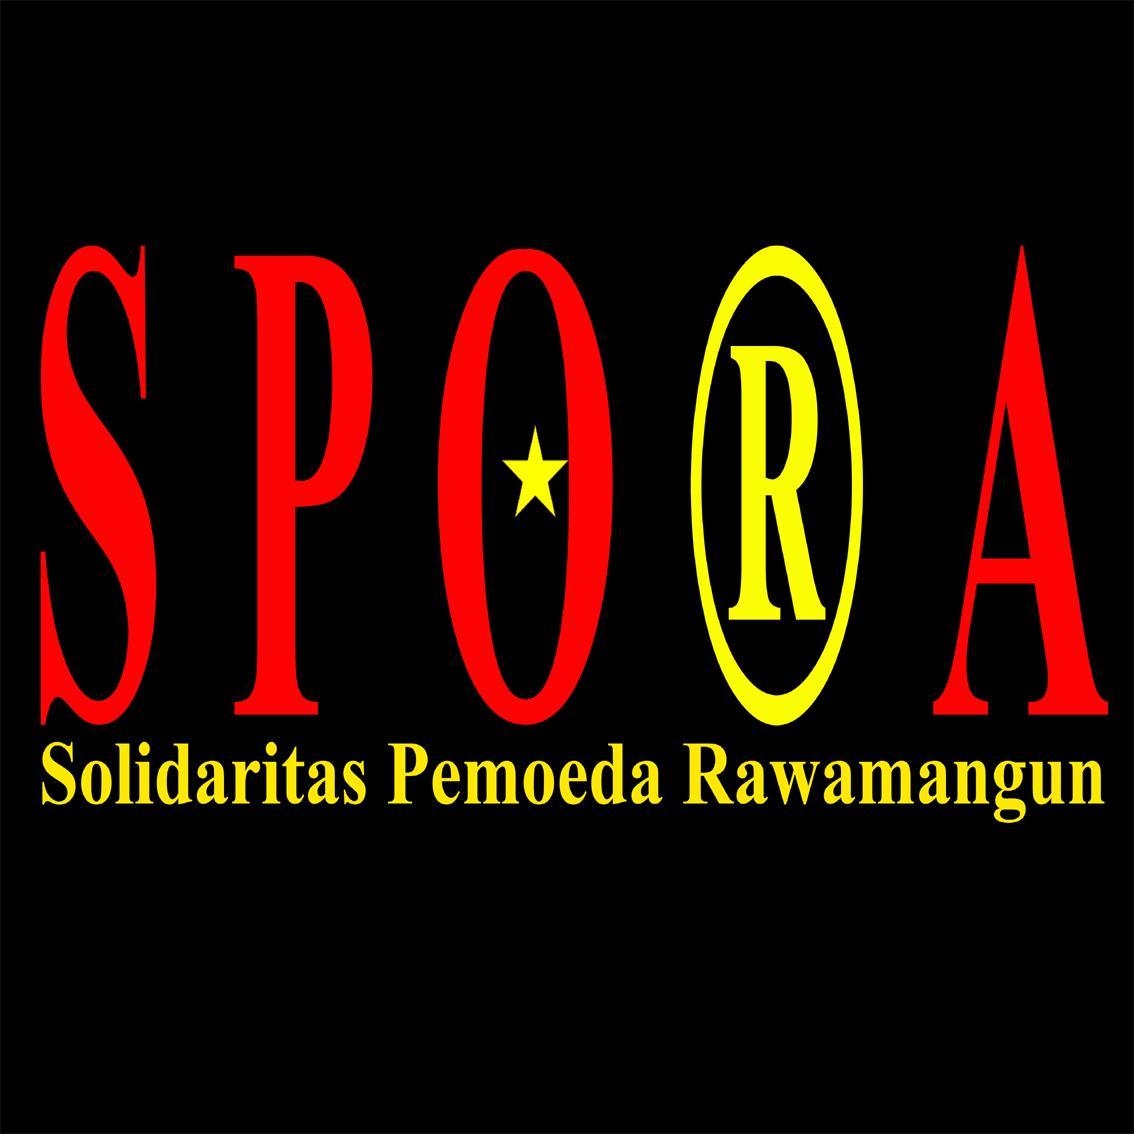 Solidaritas Pemoeda Rawamangun | Berkawan dan melawan | Basis Front Perjuangan Pemuda Indonesia | RAKYAT KUASA ! | OA LINE: @eza6555g | Spora_unj@gmail.com